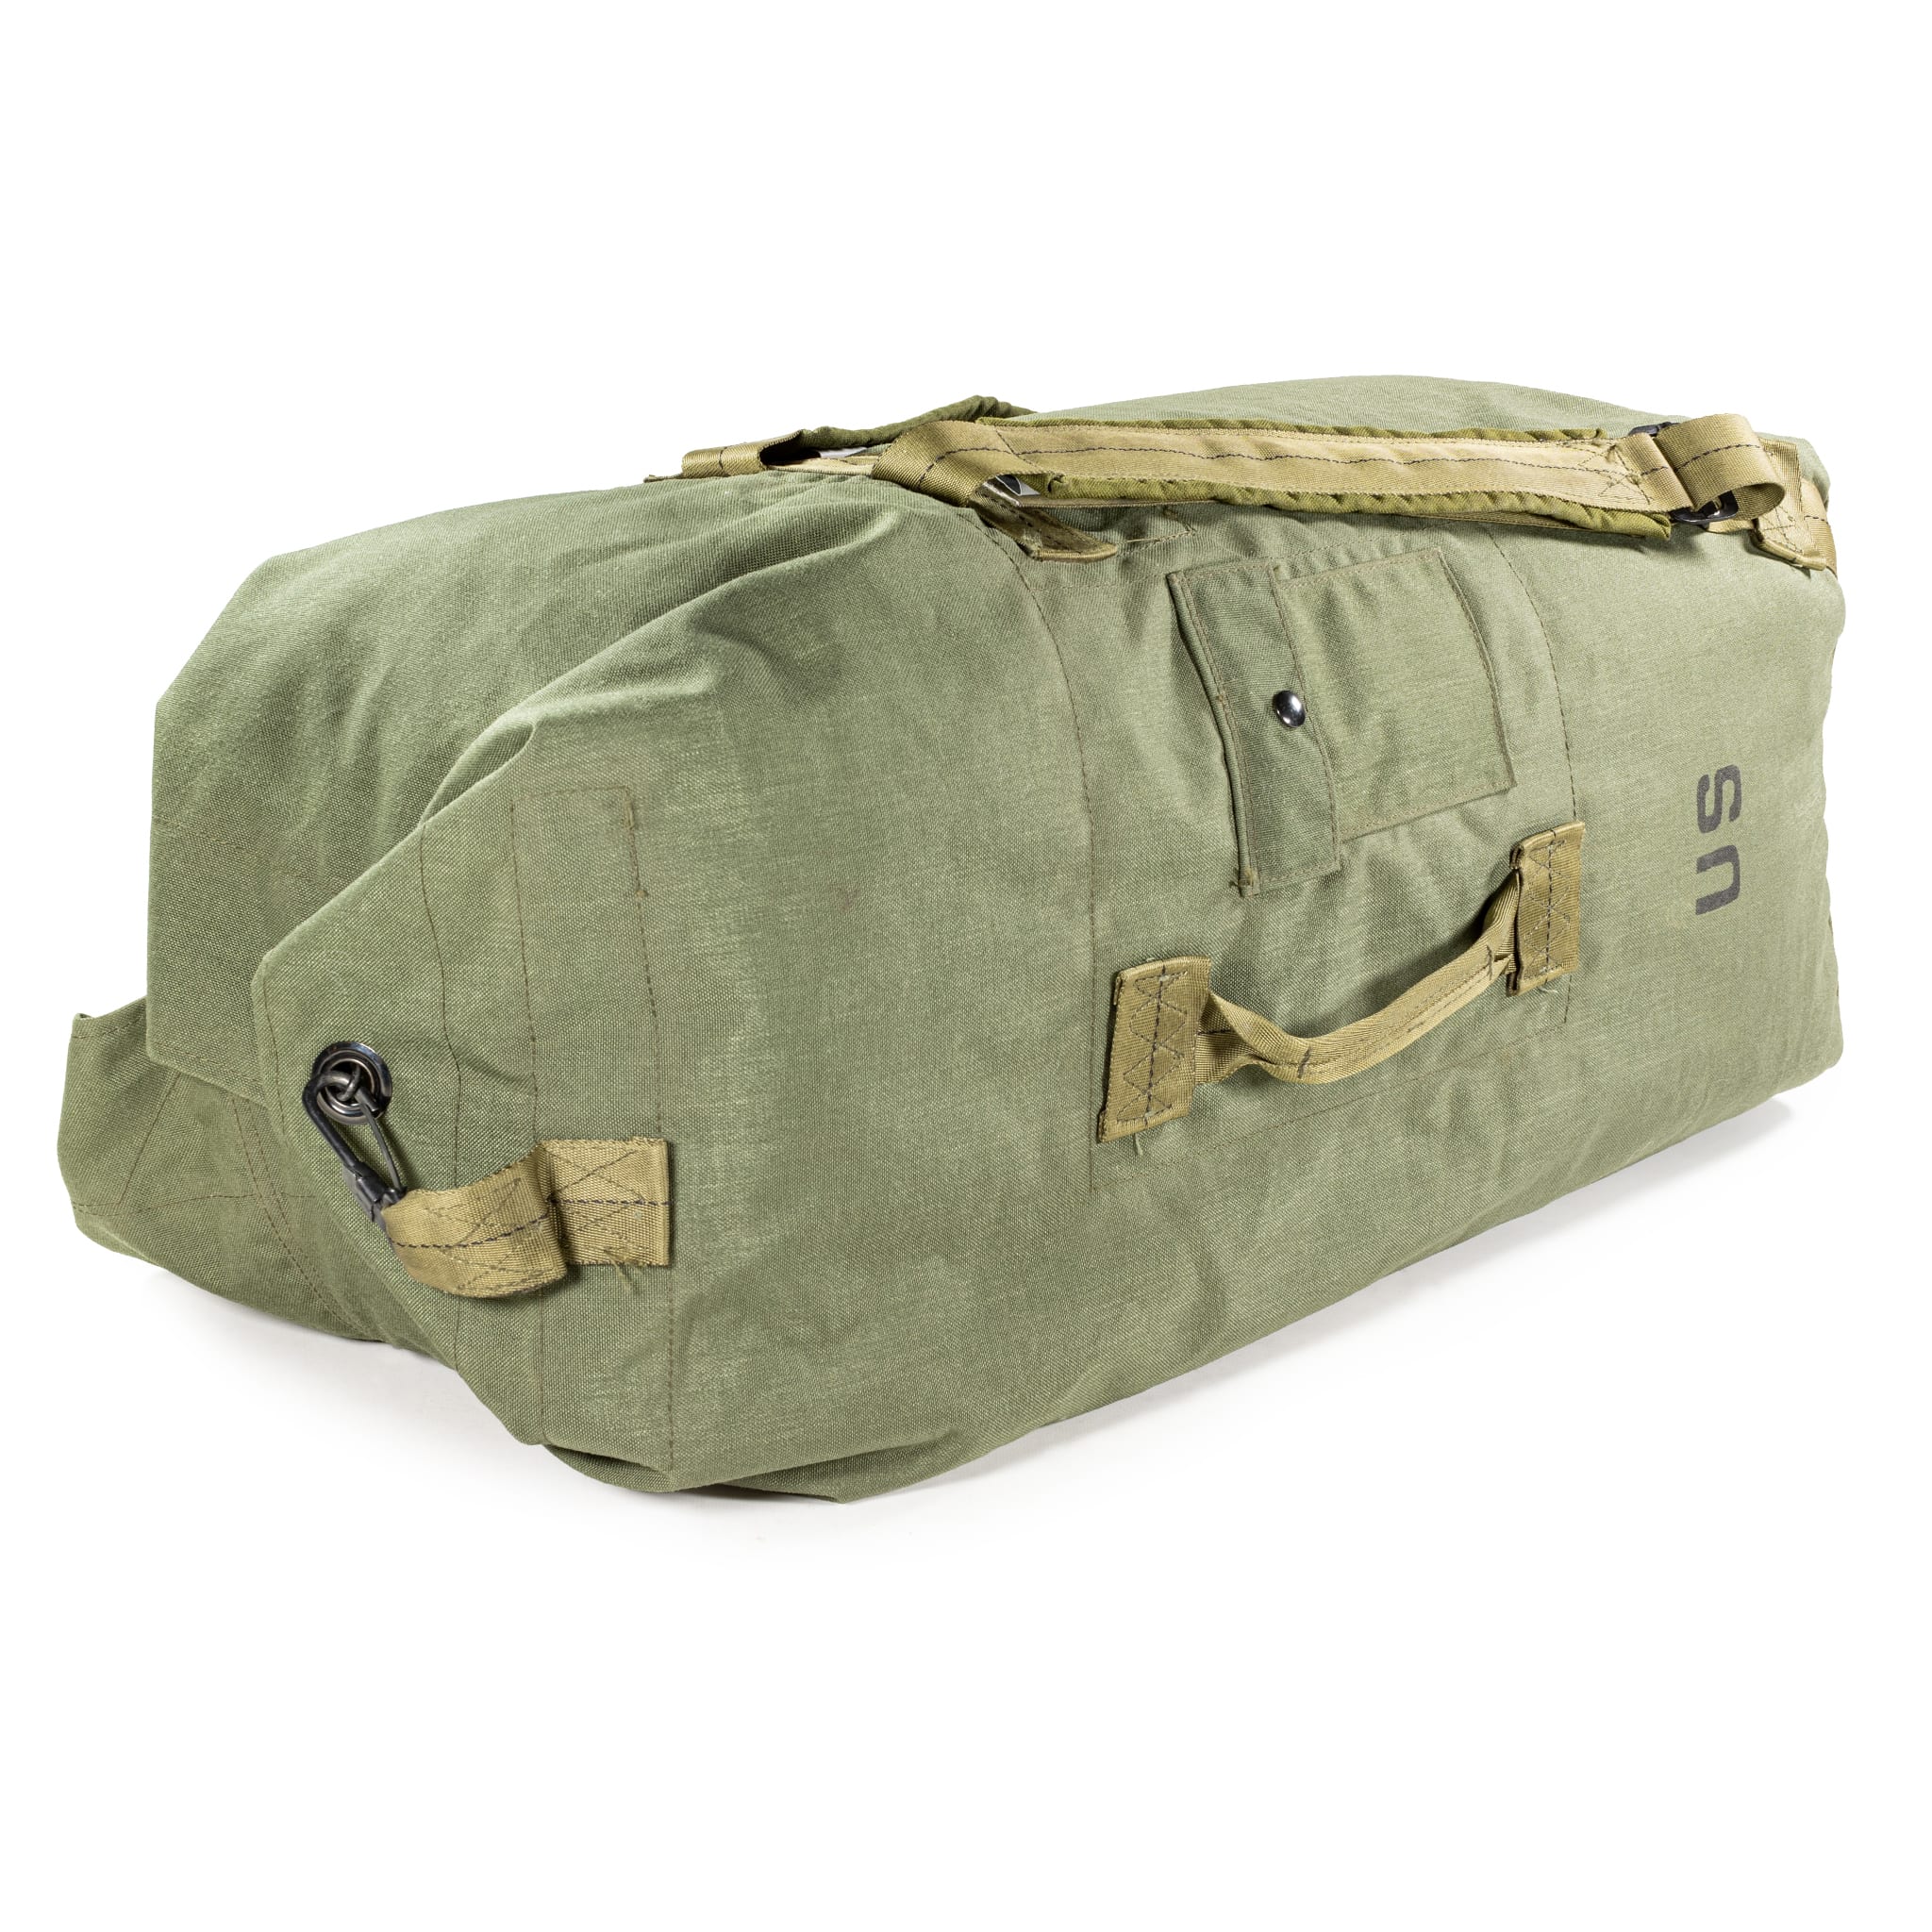 USGI Duffel， Improved Duffle Bag Current US Military Issue! [Very